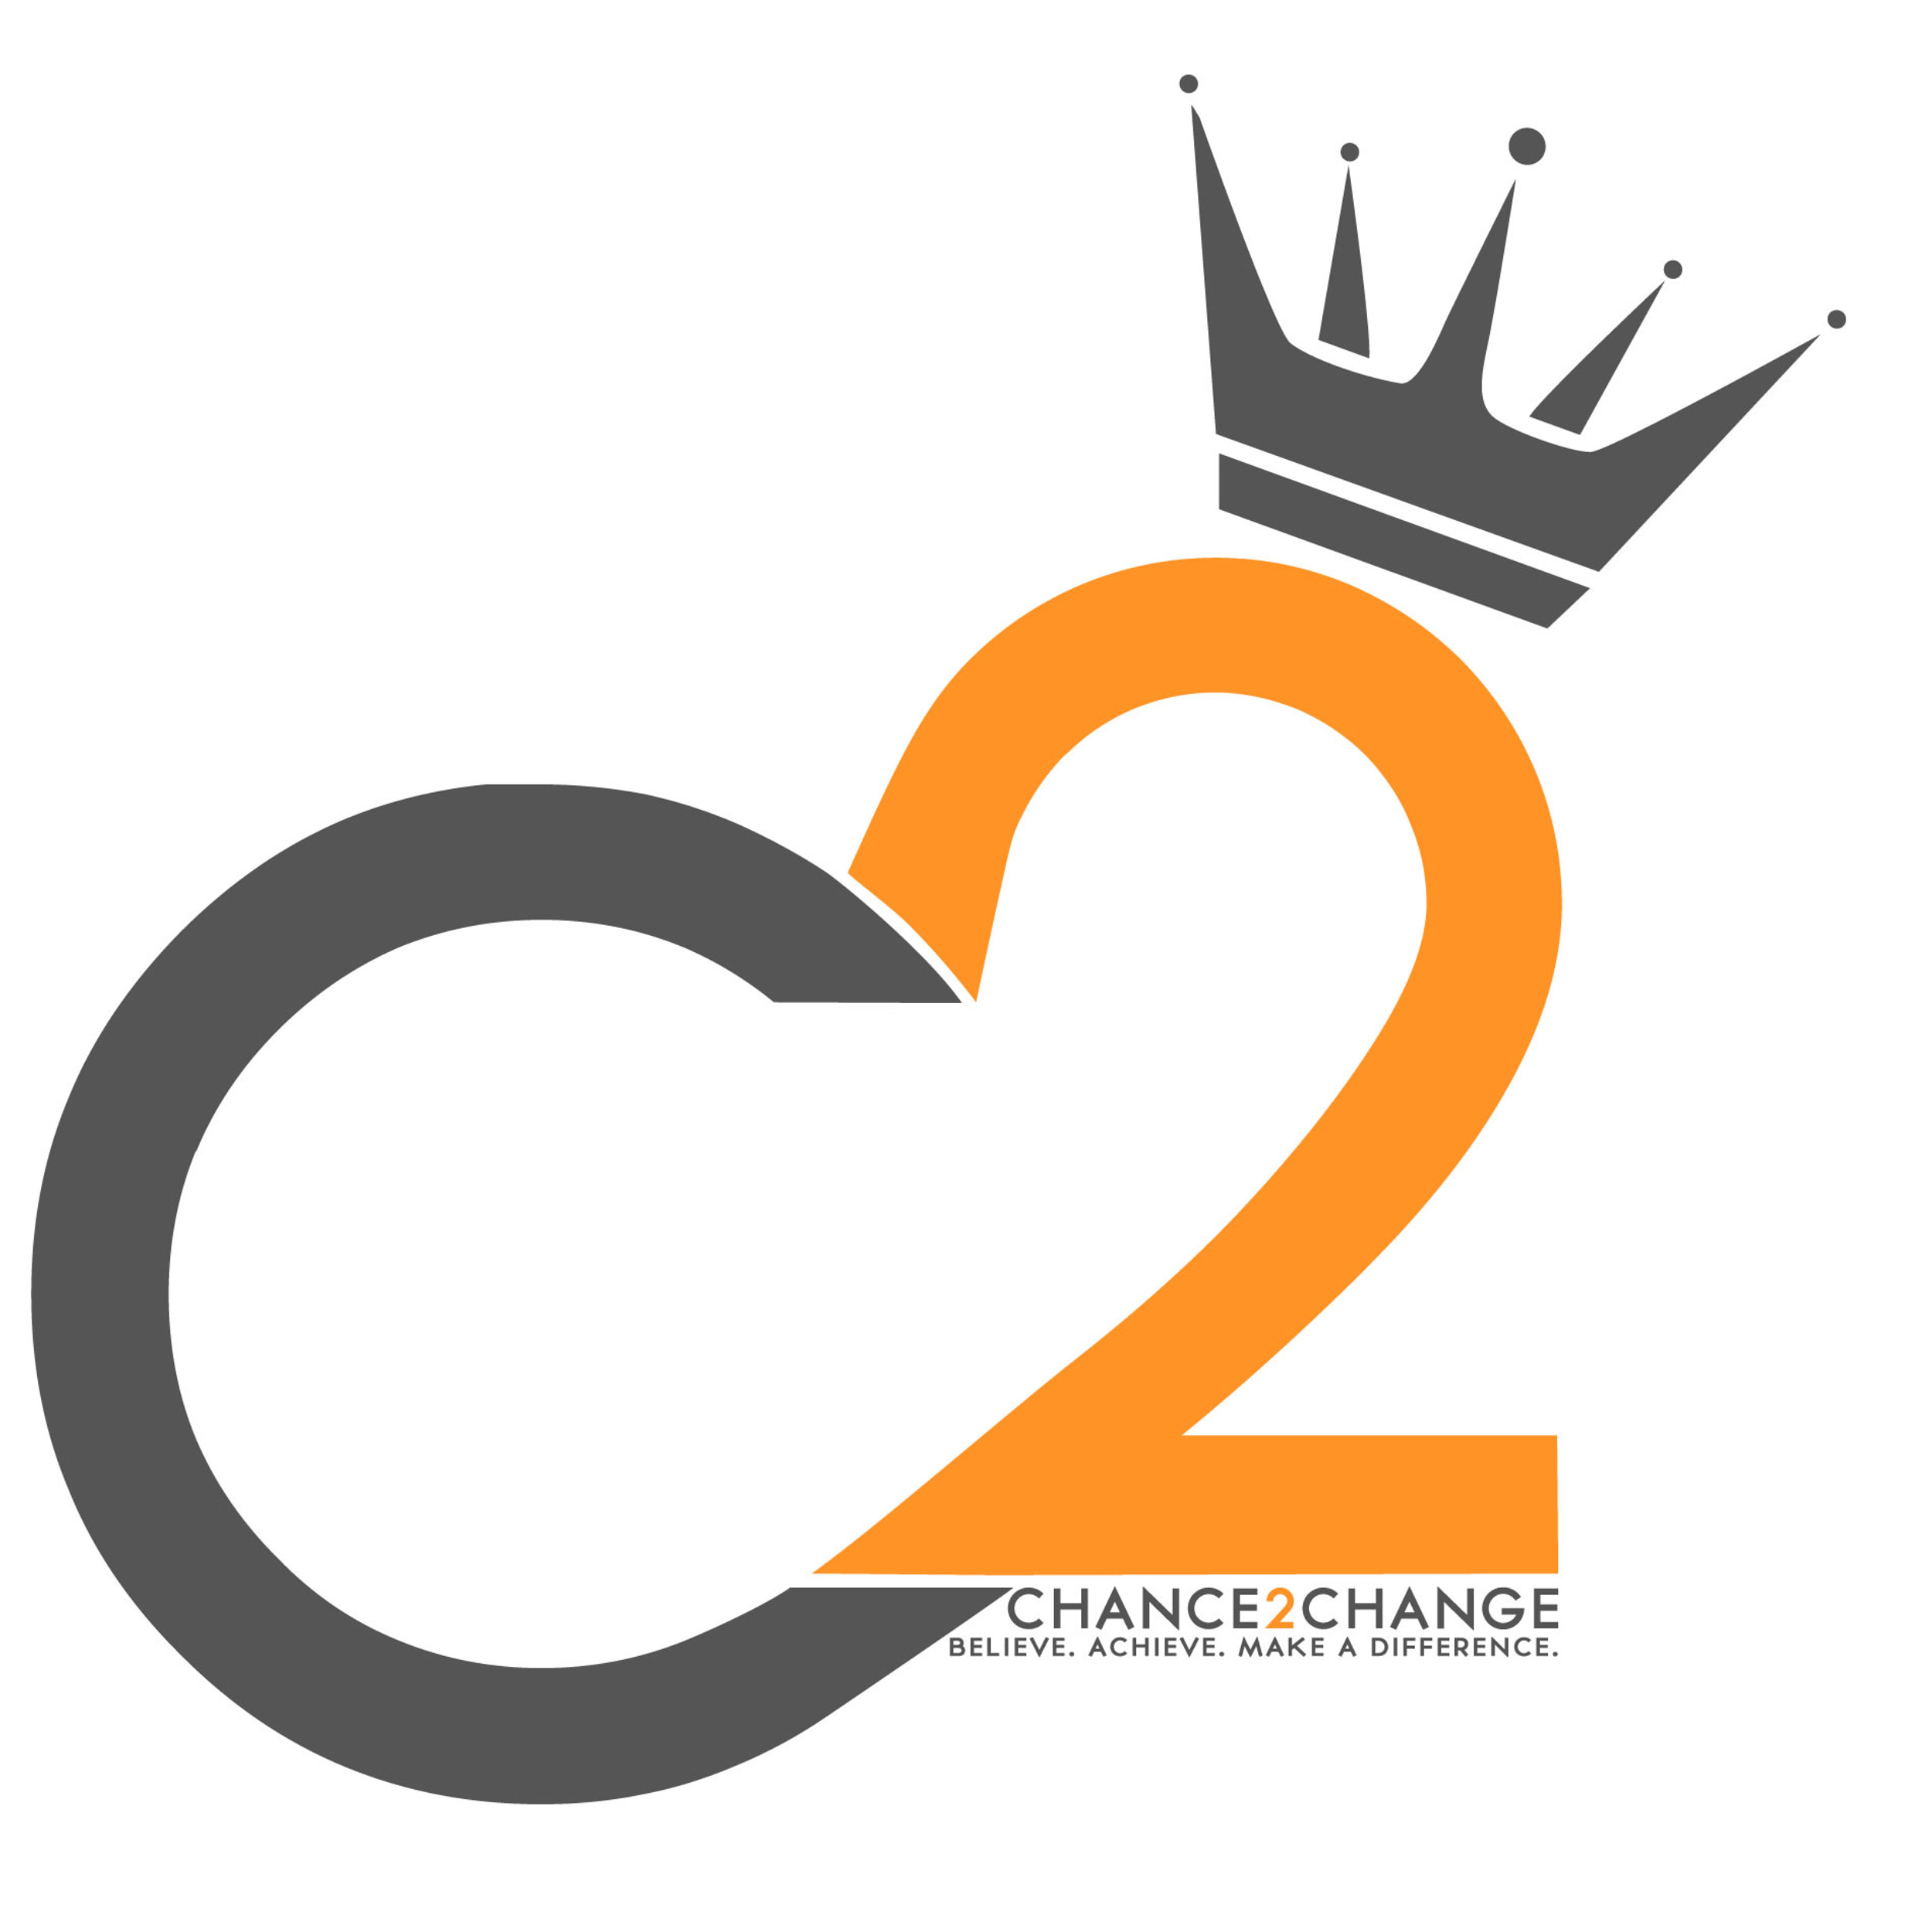 Chance 2 Change